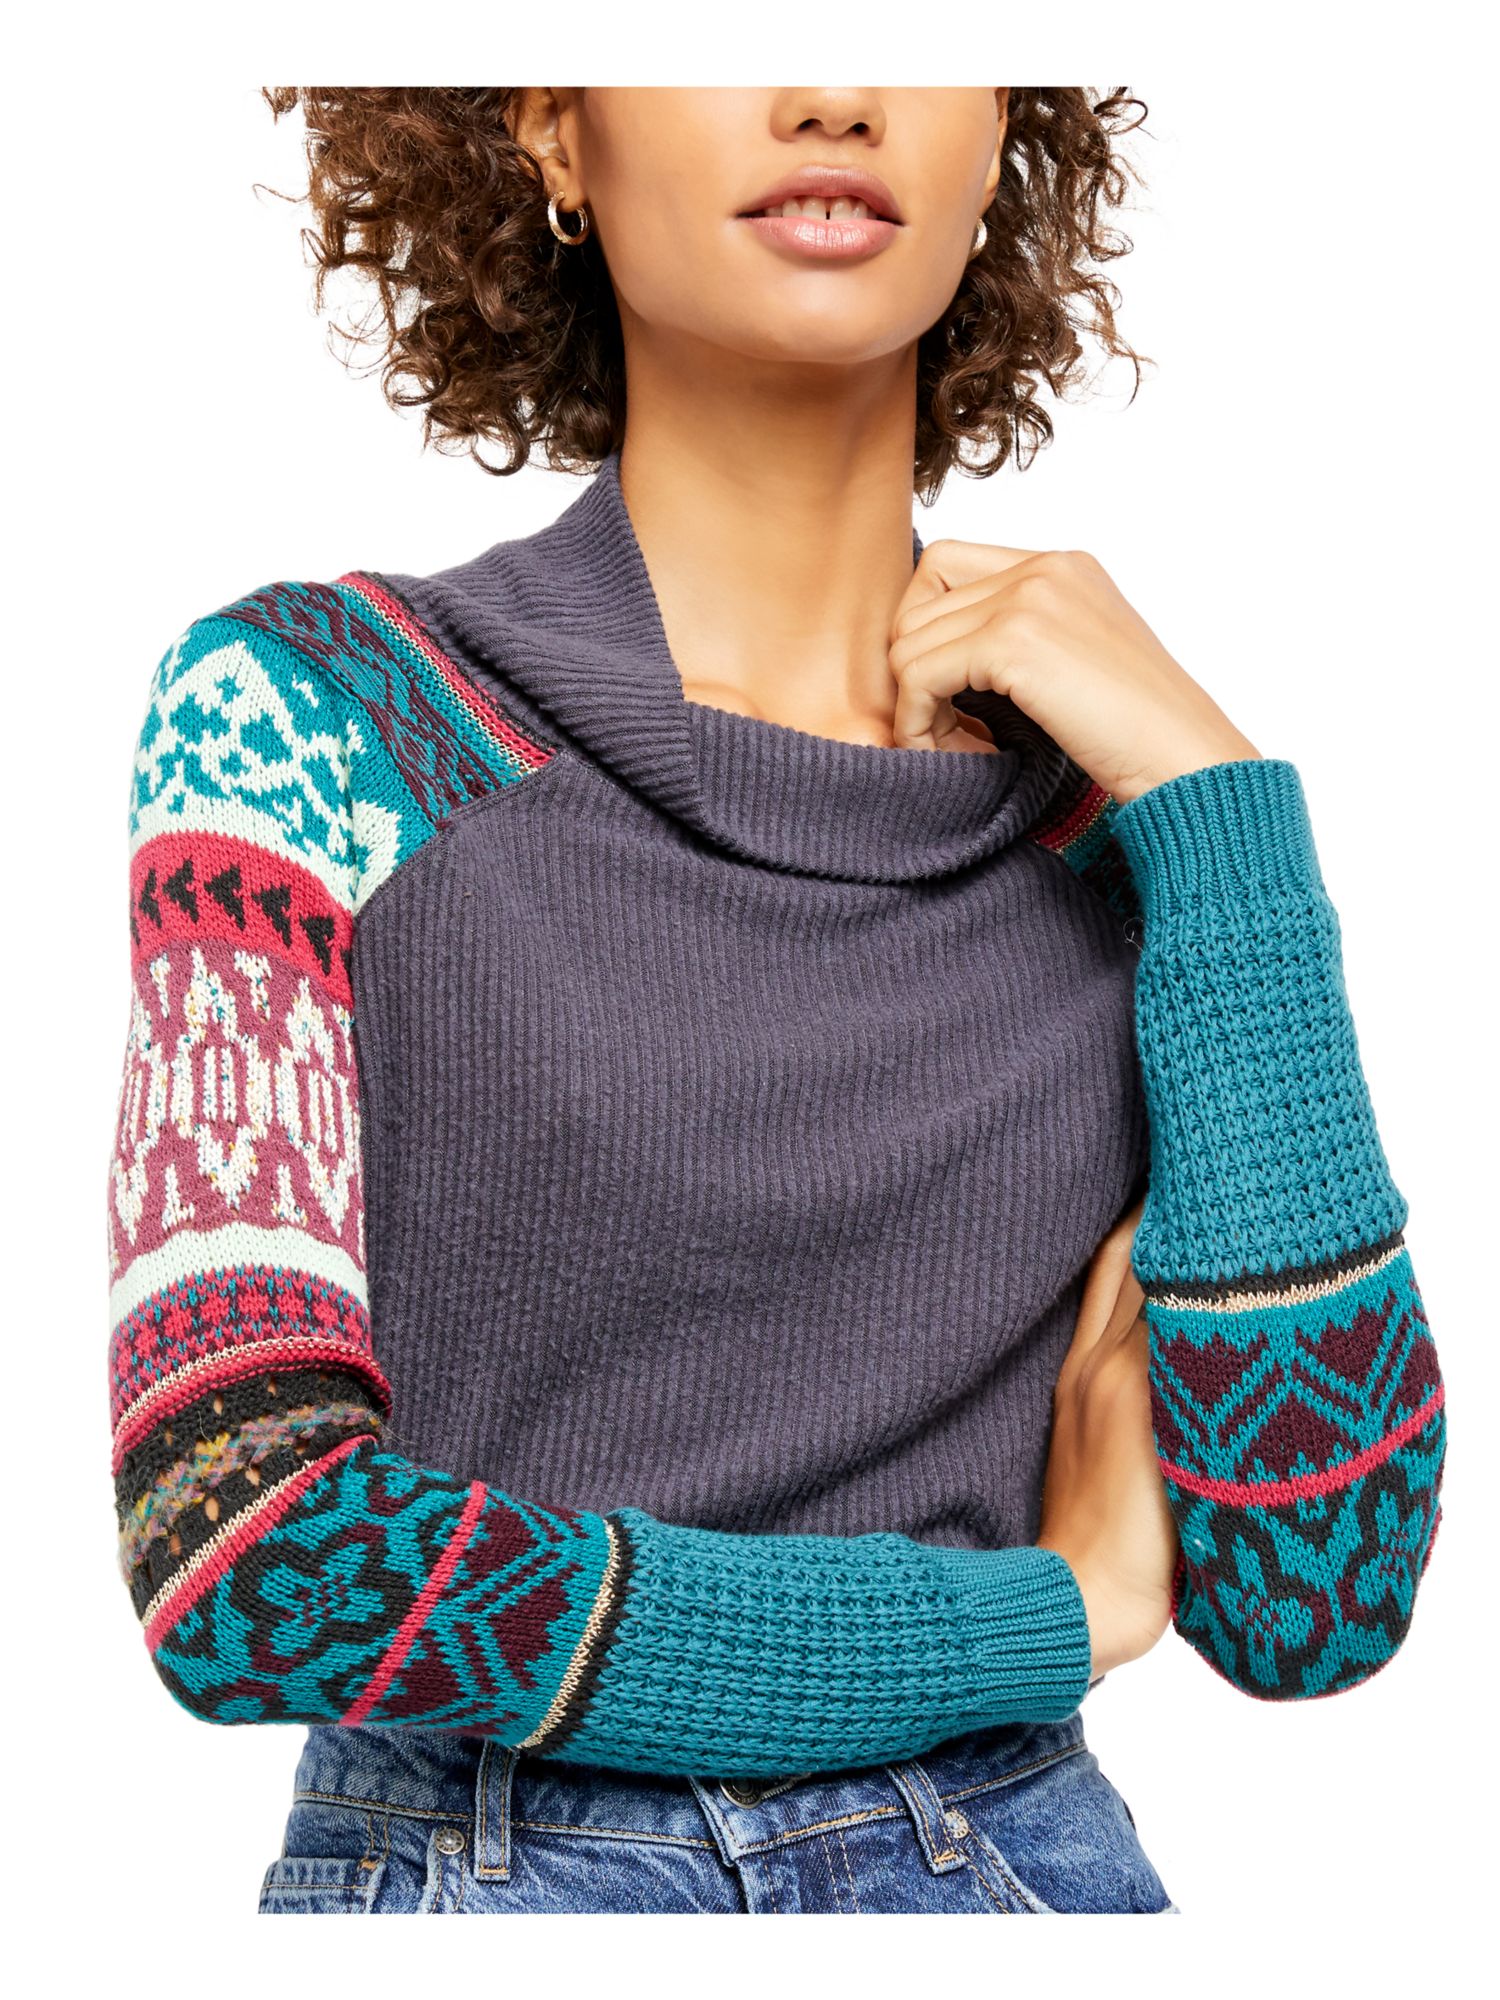 Free People Women's Prism Sweater Purple Size Medium - image 1 of 2